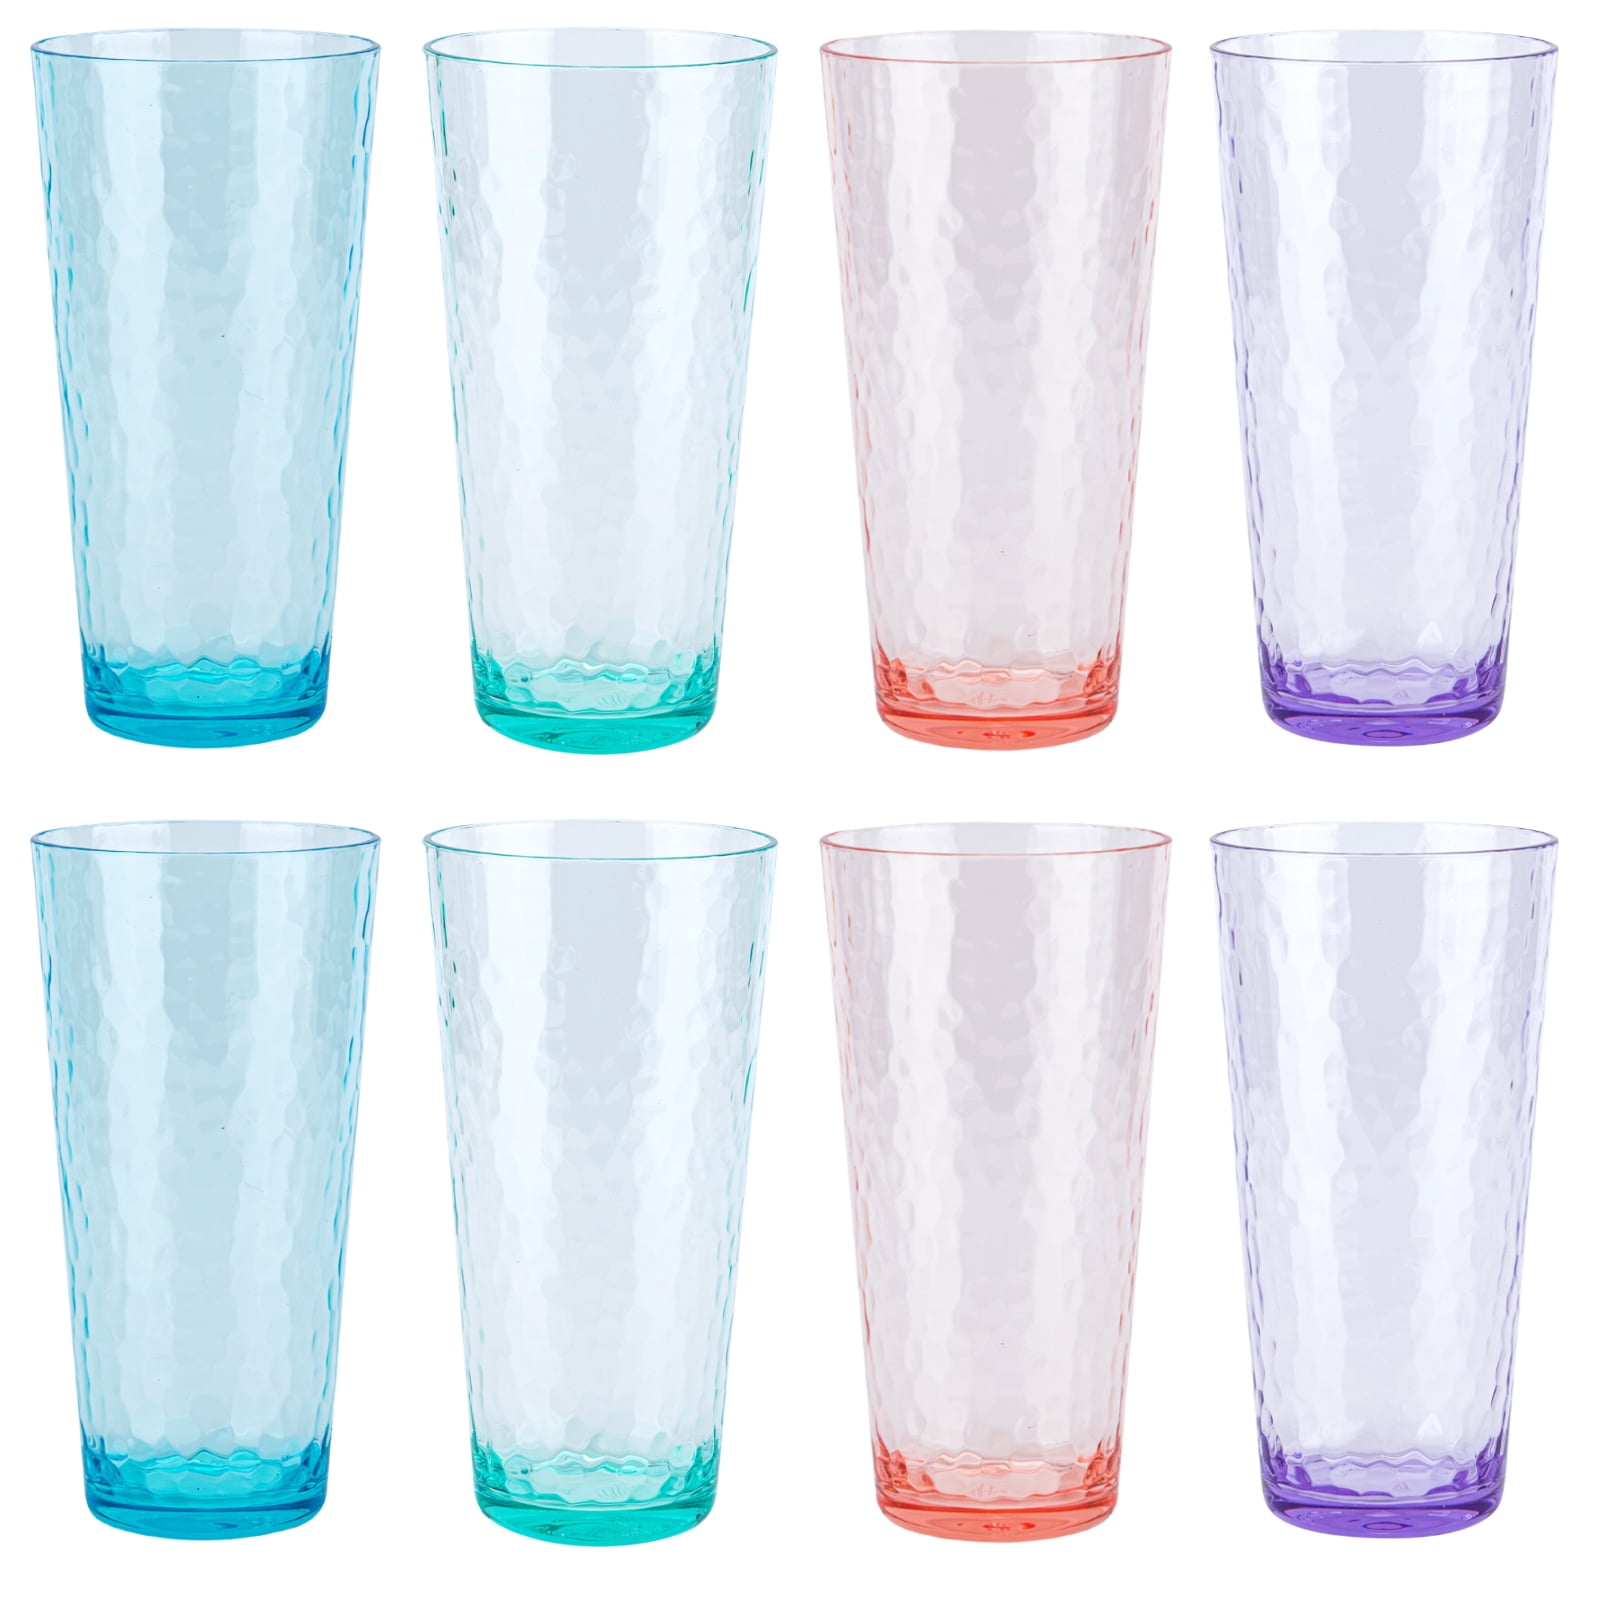 US Acrylic Classic Clear Plastic Reusable Drinking Glasses (Set of 6) 12oz  Rocks Cups | BPA-Free Tum…See more US Acrylic Classic Clear Plastic